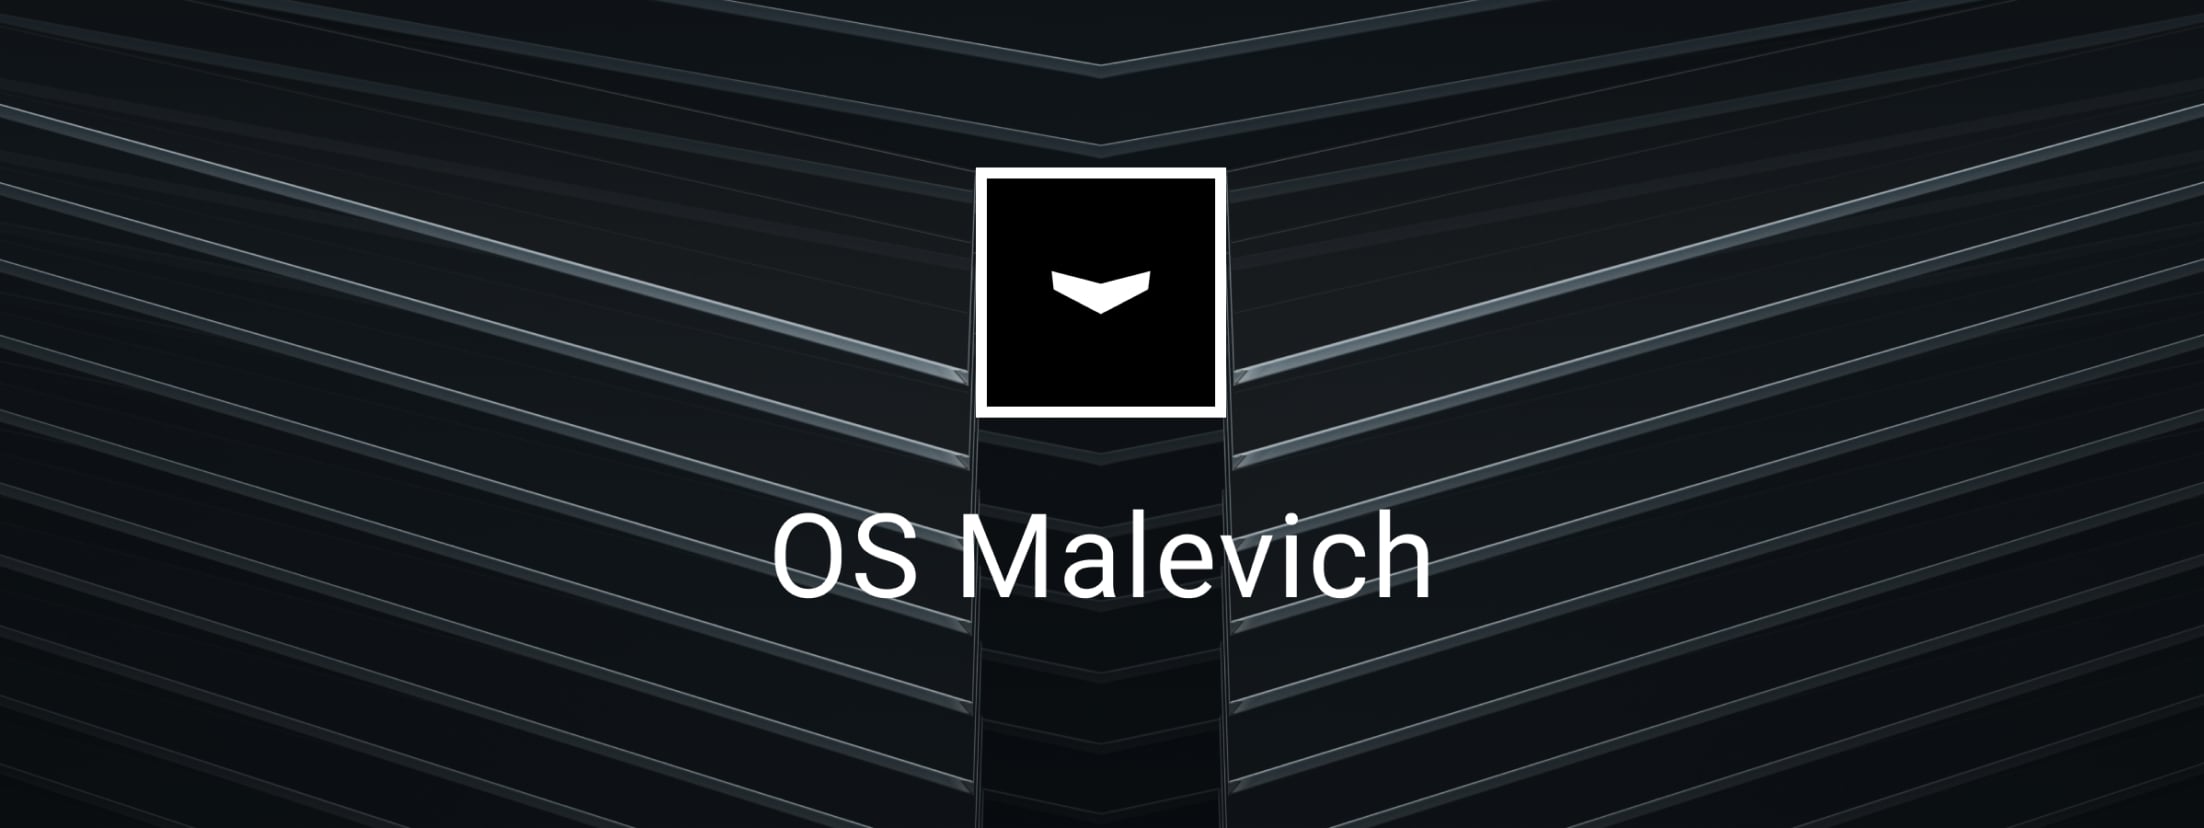 OS Malevich